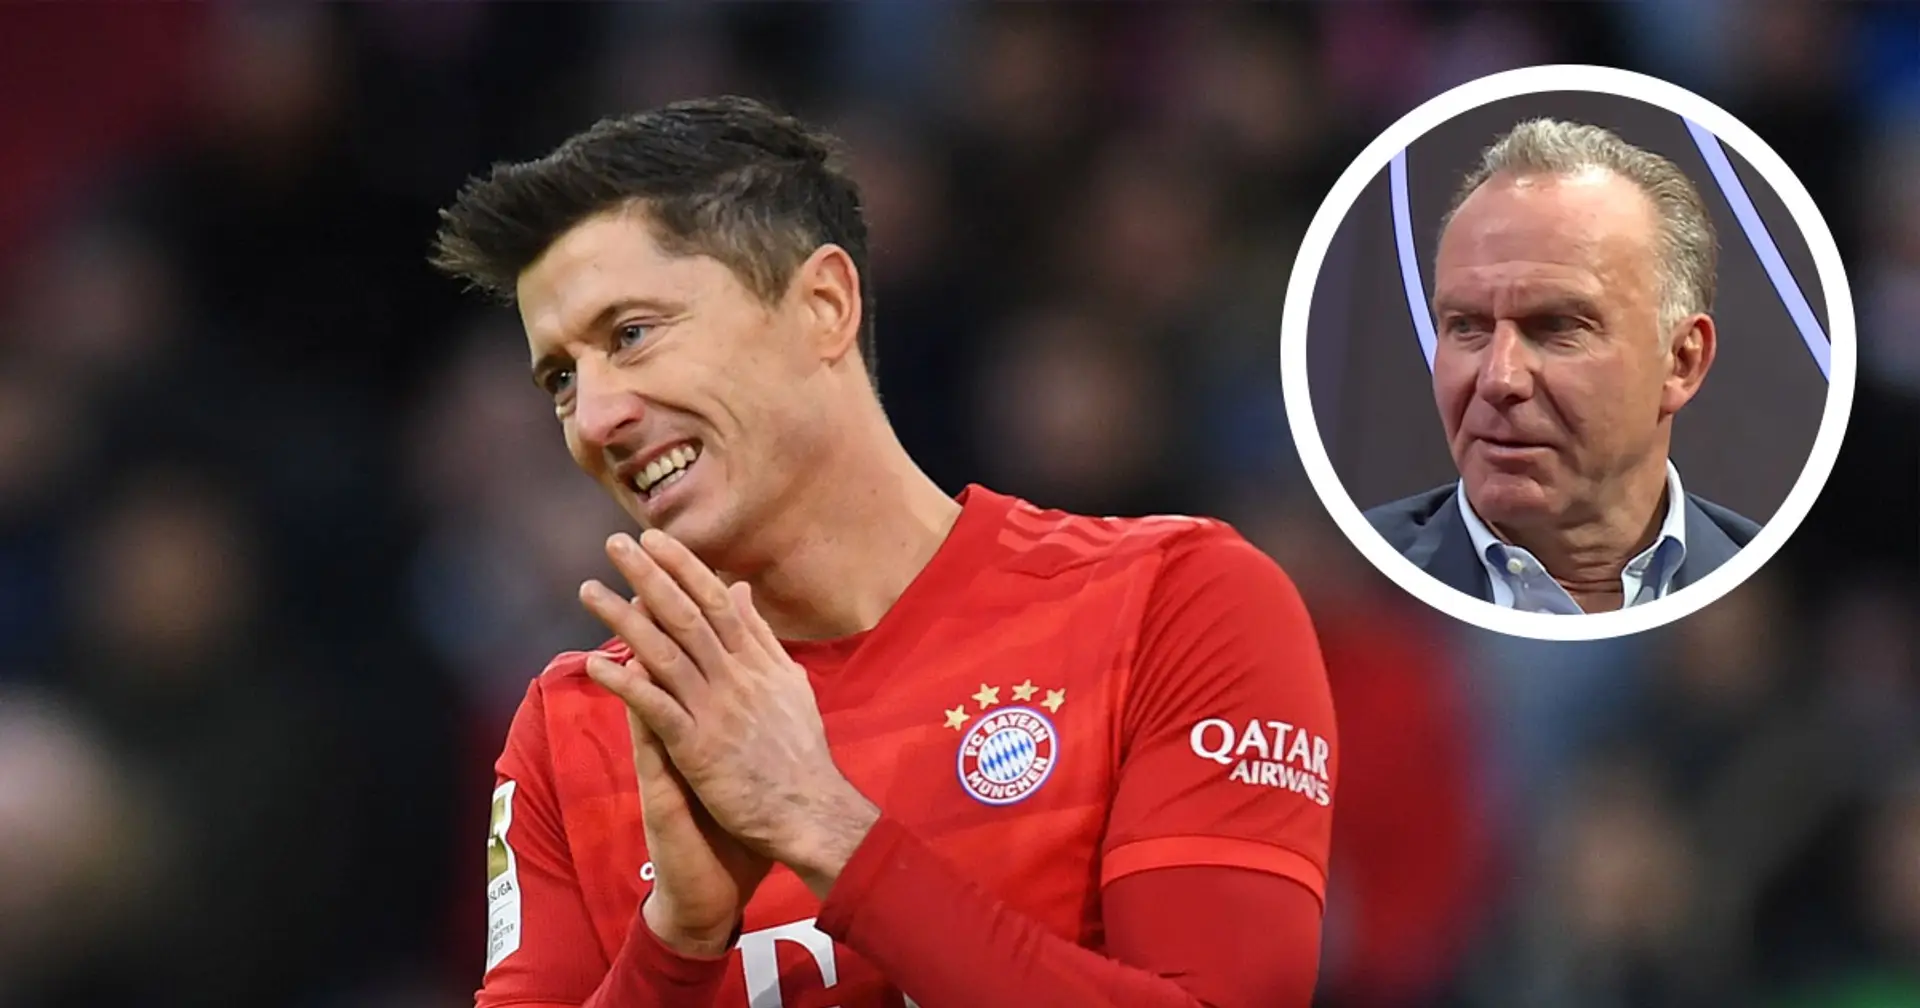 'Lewandowski might have won it': Karl-Heinz Rummenigge laments 'not very fair' 2020 Ballon d'Or cancellation